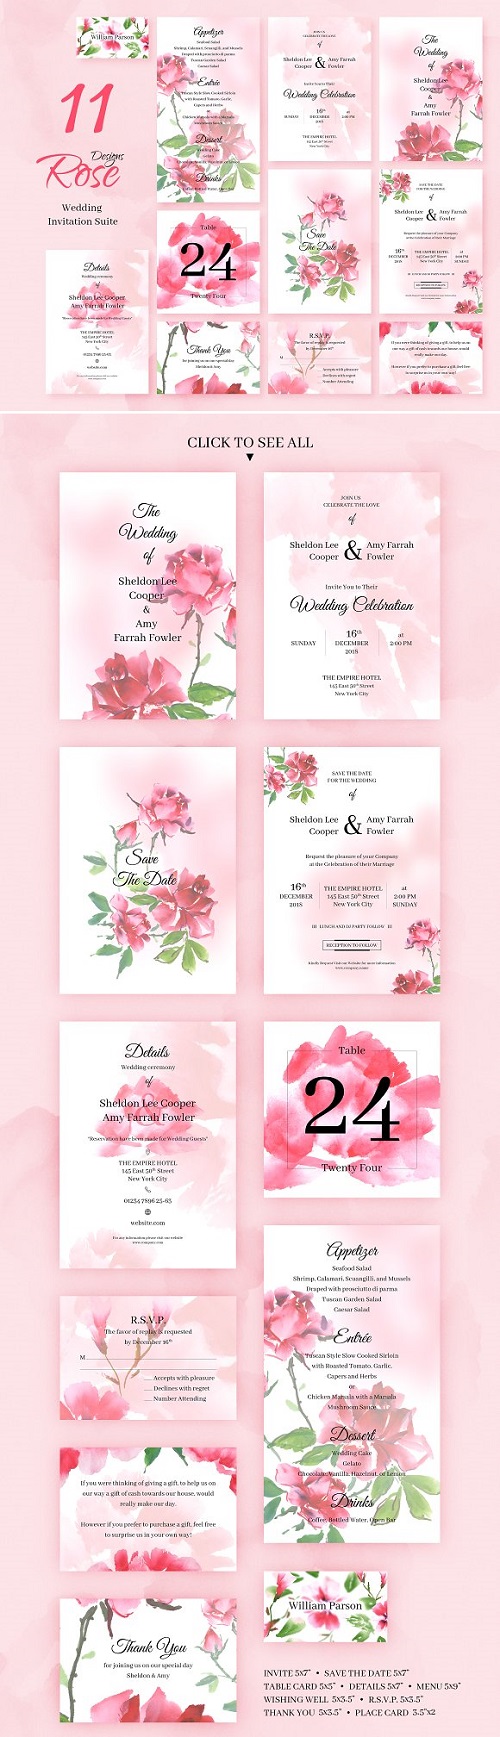 Rose Wedding Invitation Package 2219020